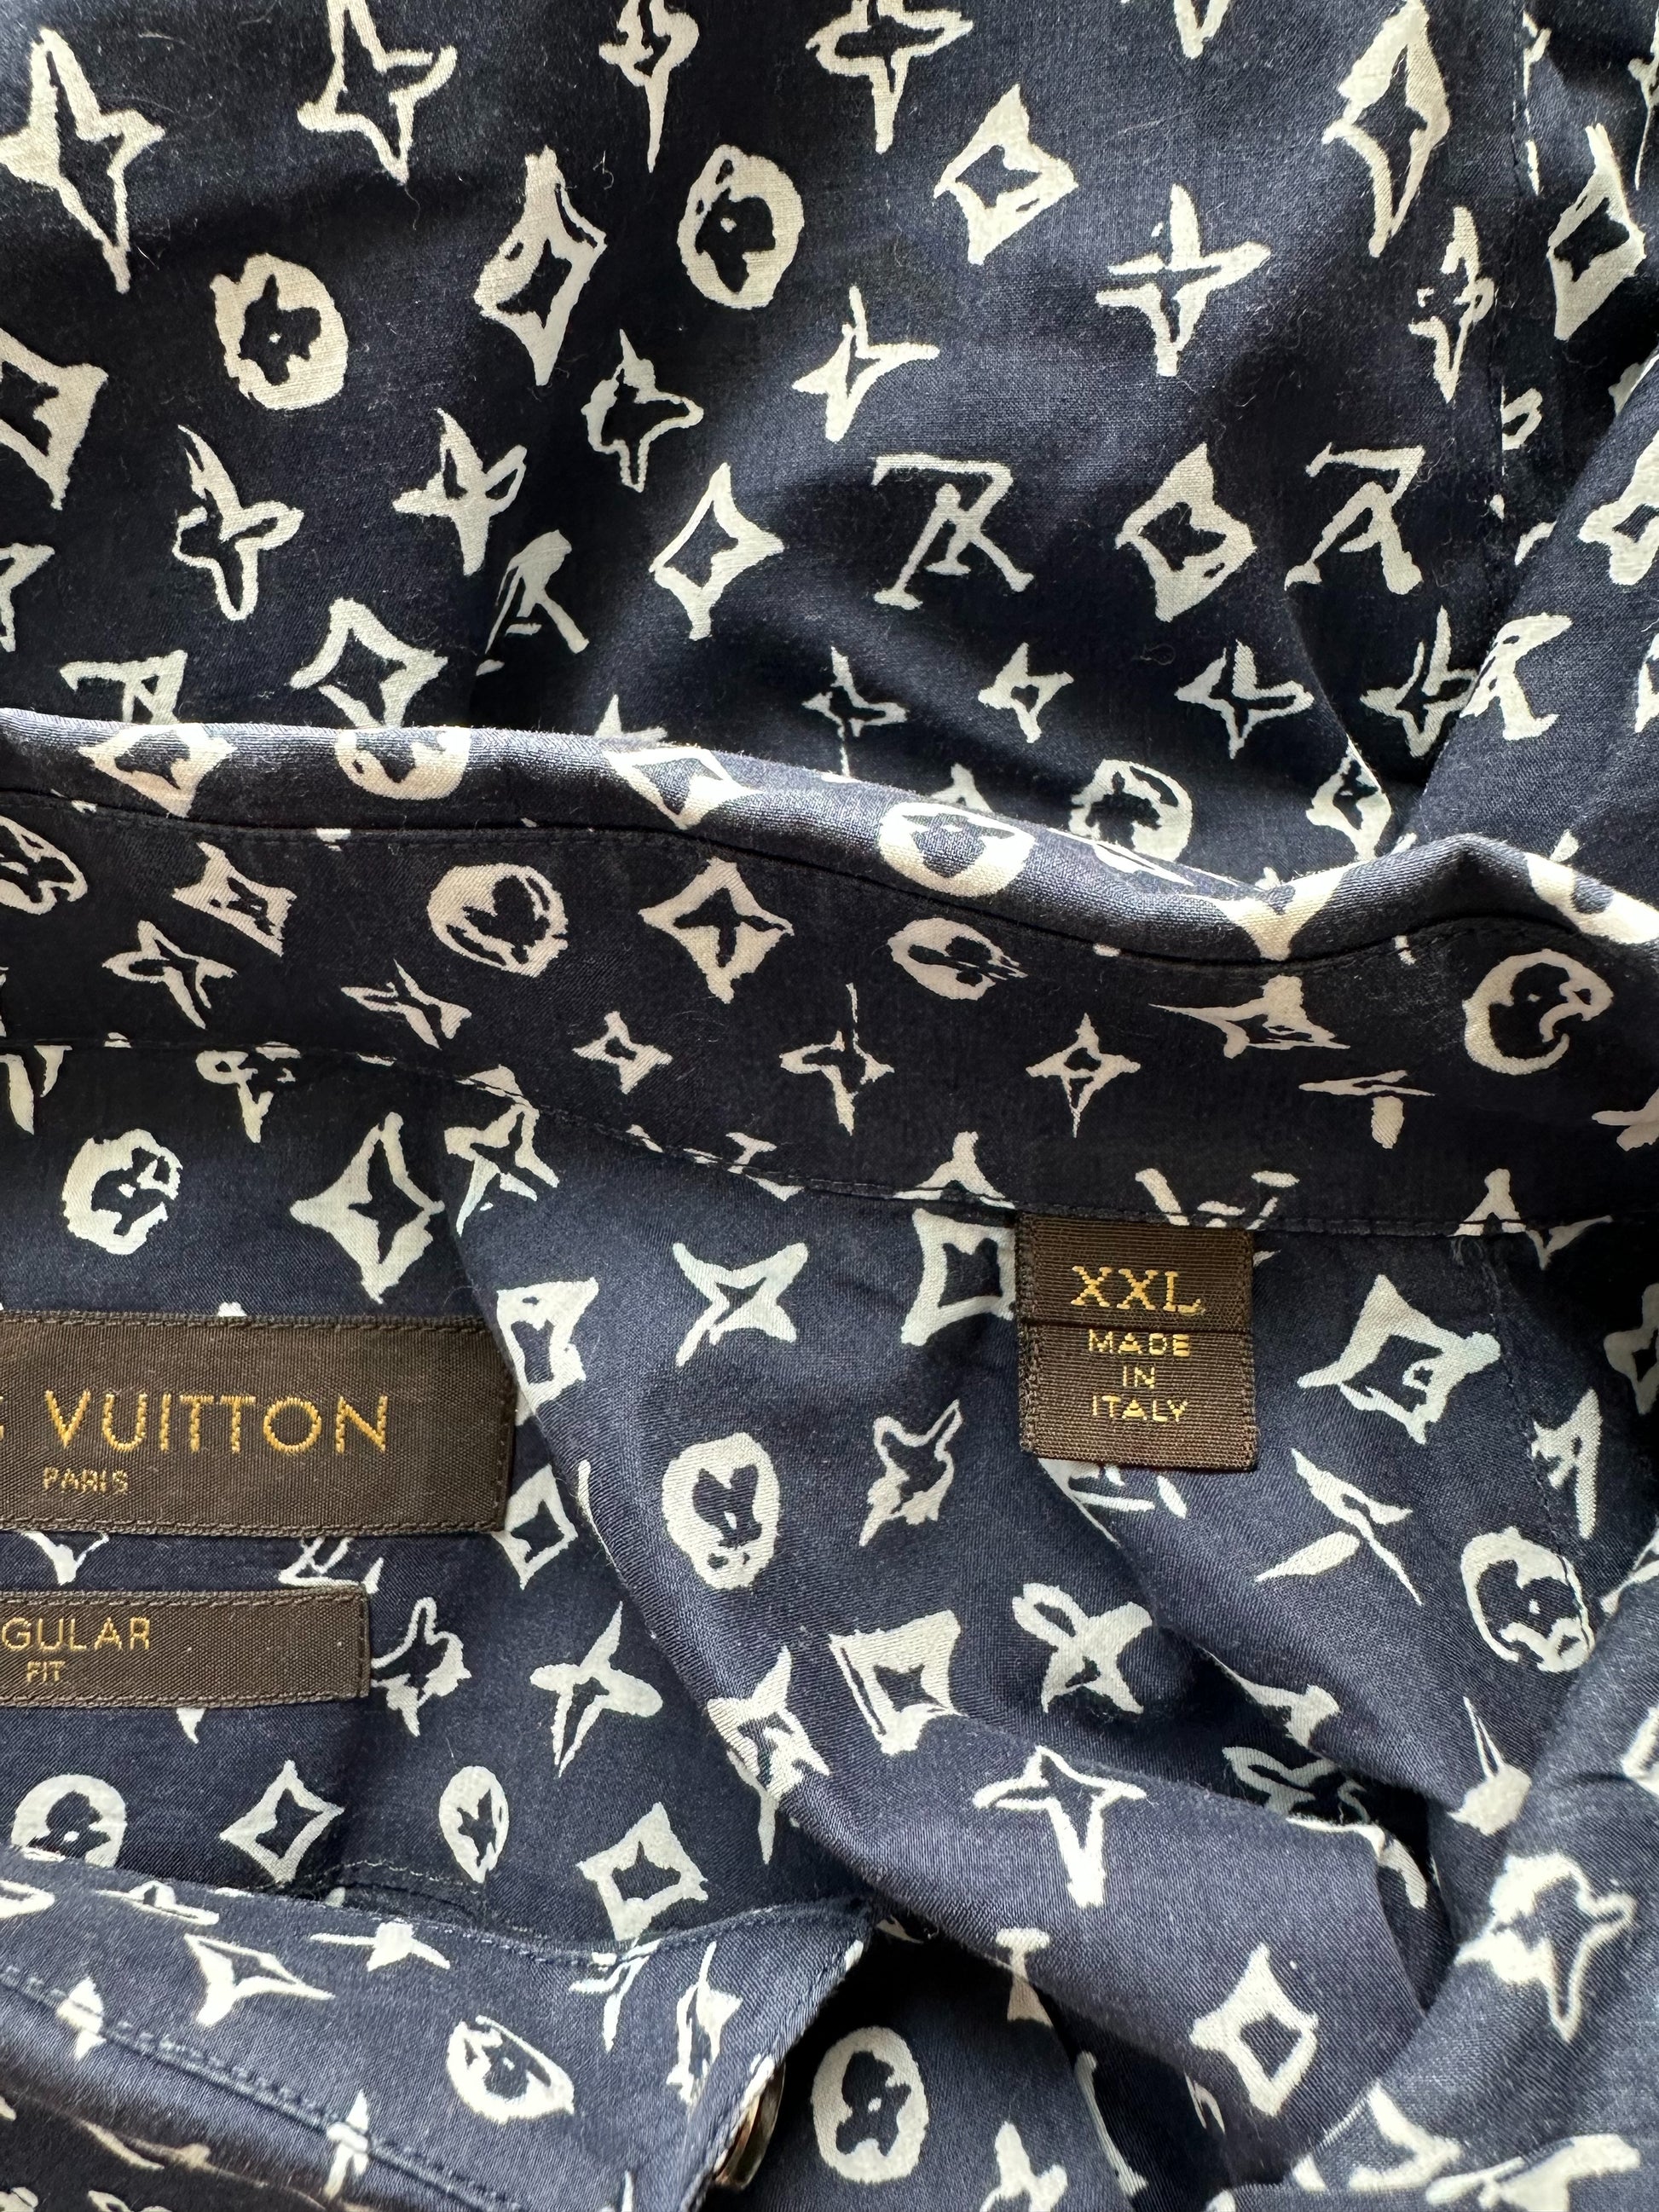 Louis Vuitton Navy & White Monogram Button Up Shirt